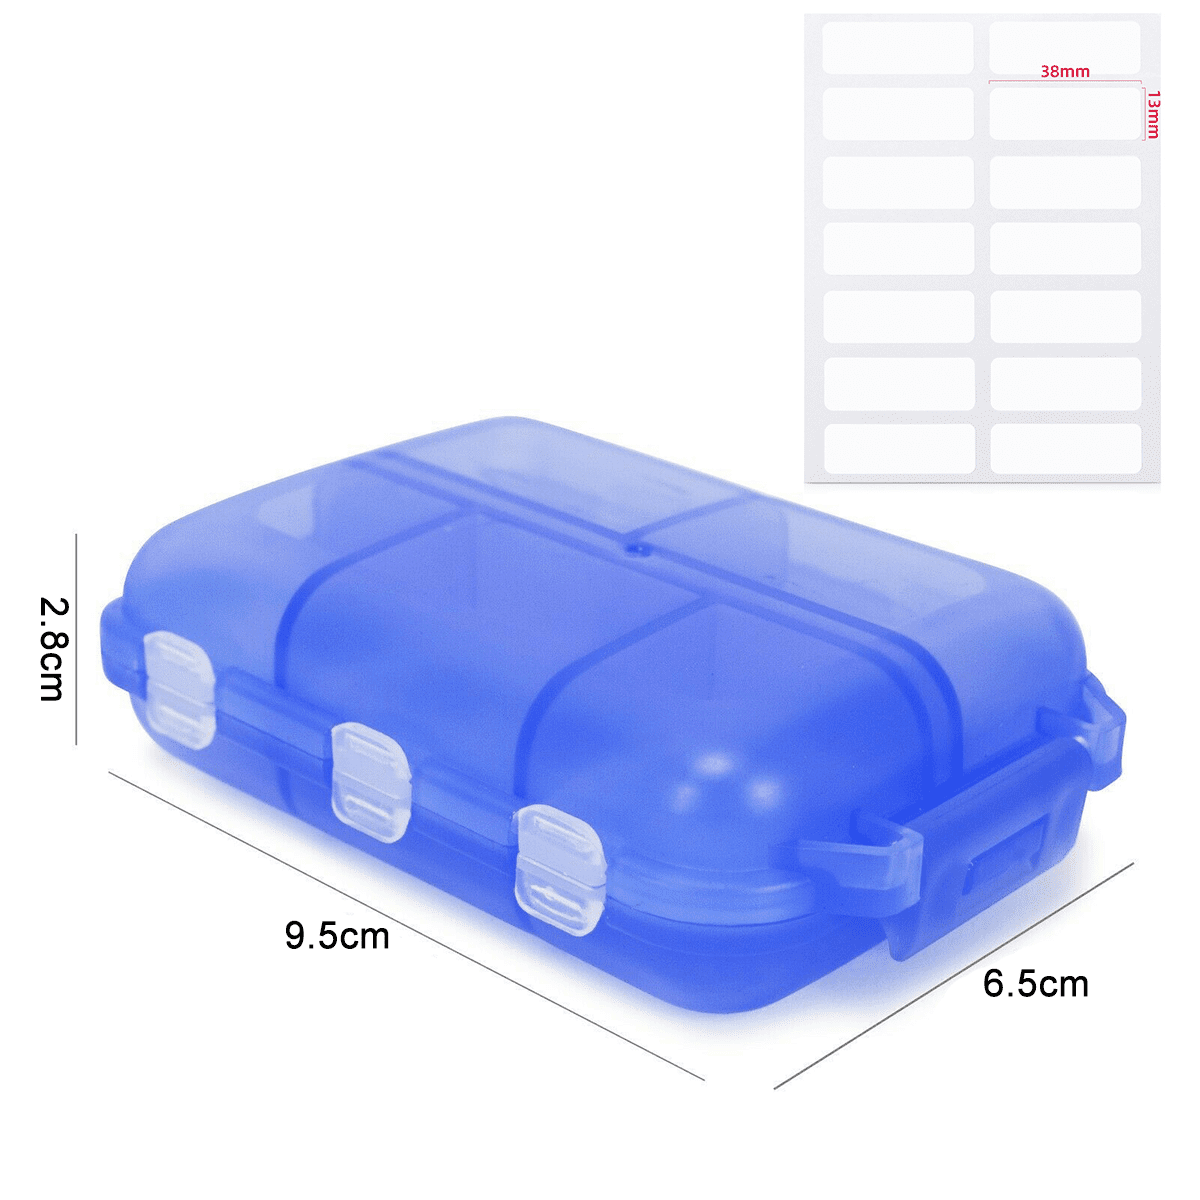 Pill Case Storage Box (Portable/WT/11x7.8x1.6cm)